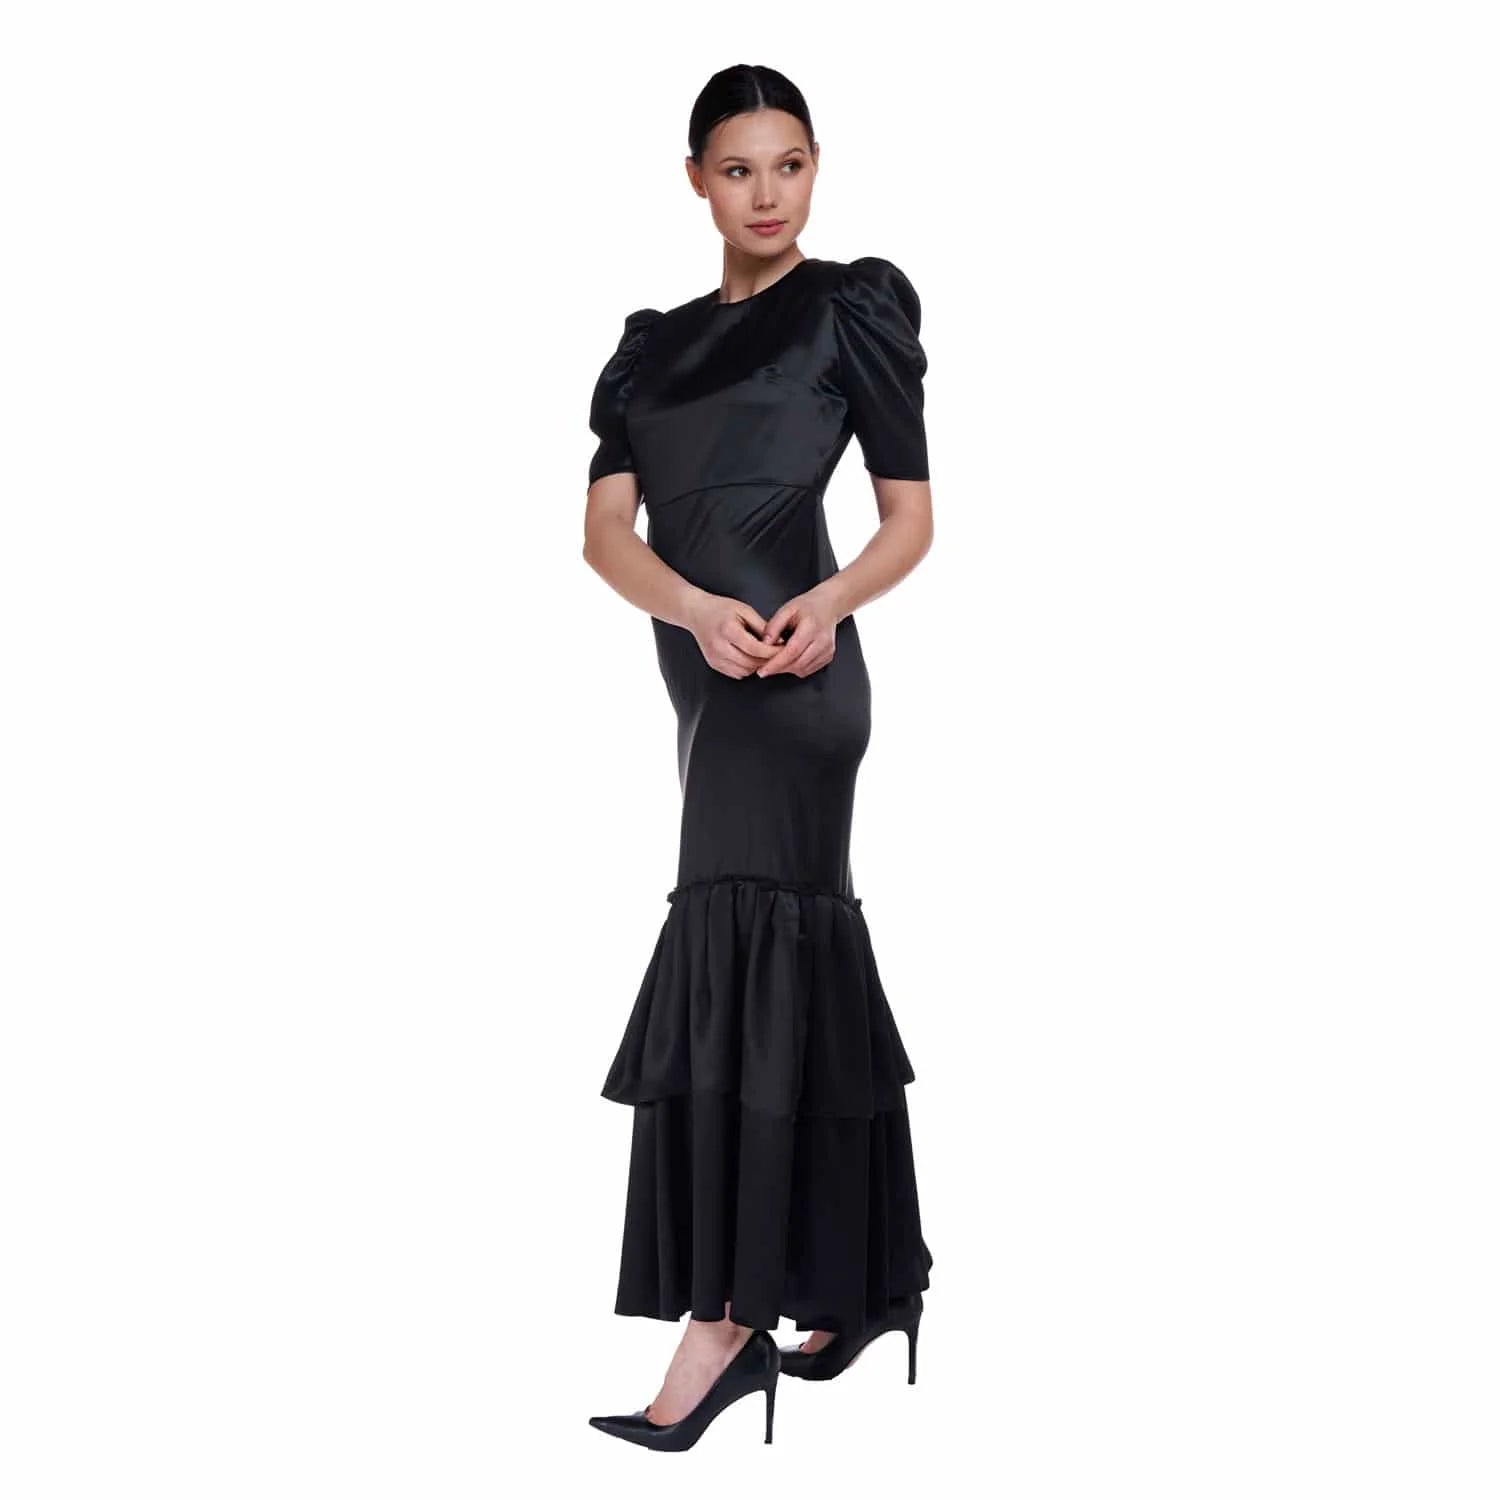 “ LADY SOFIA” dress in black silk